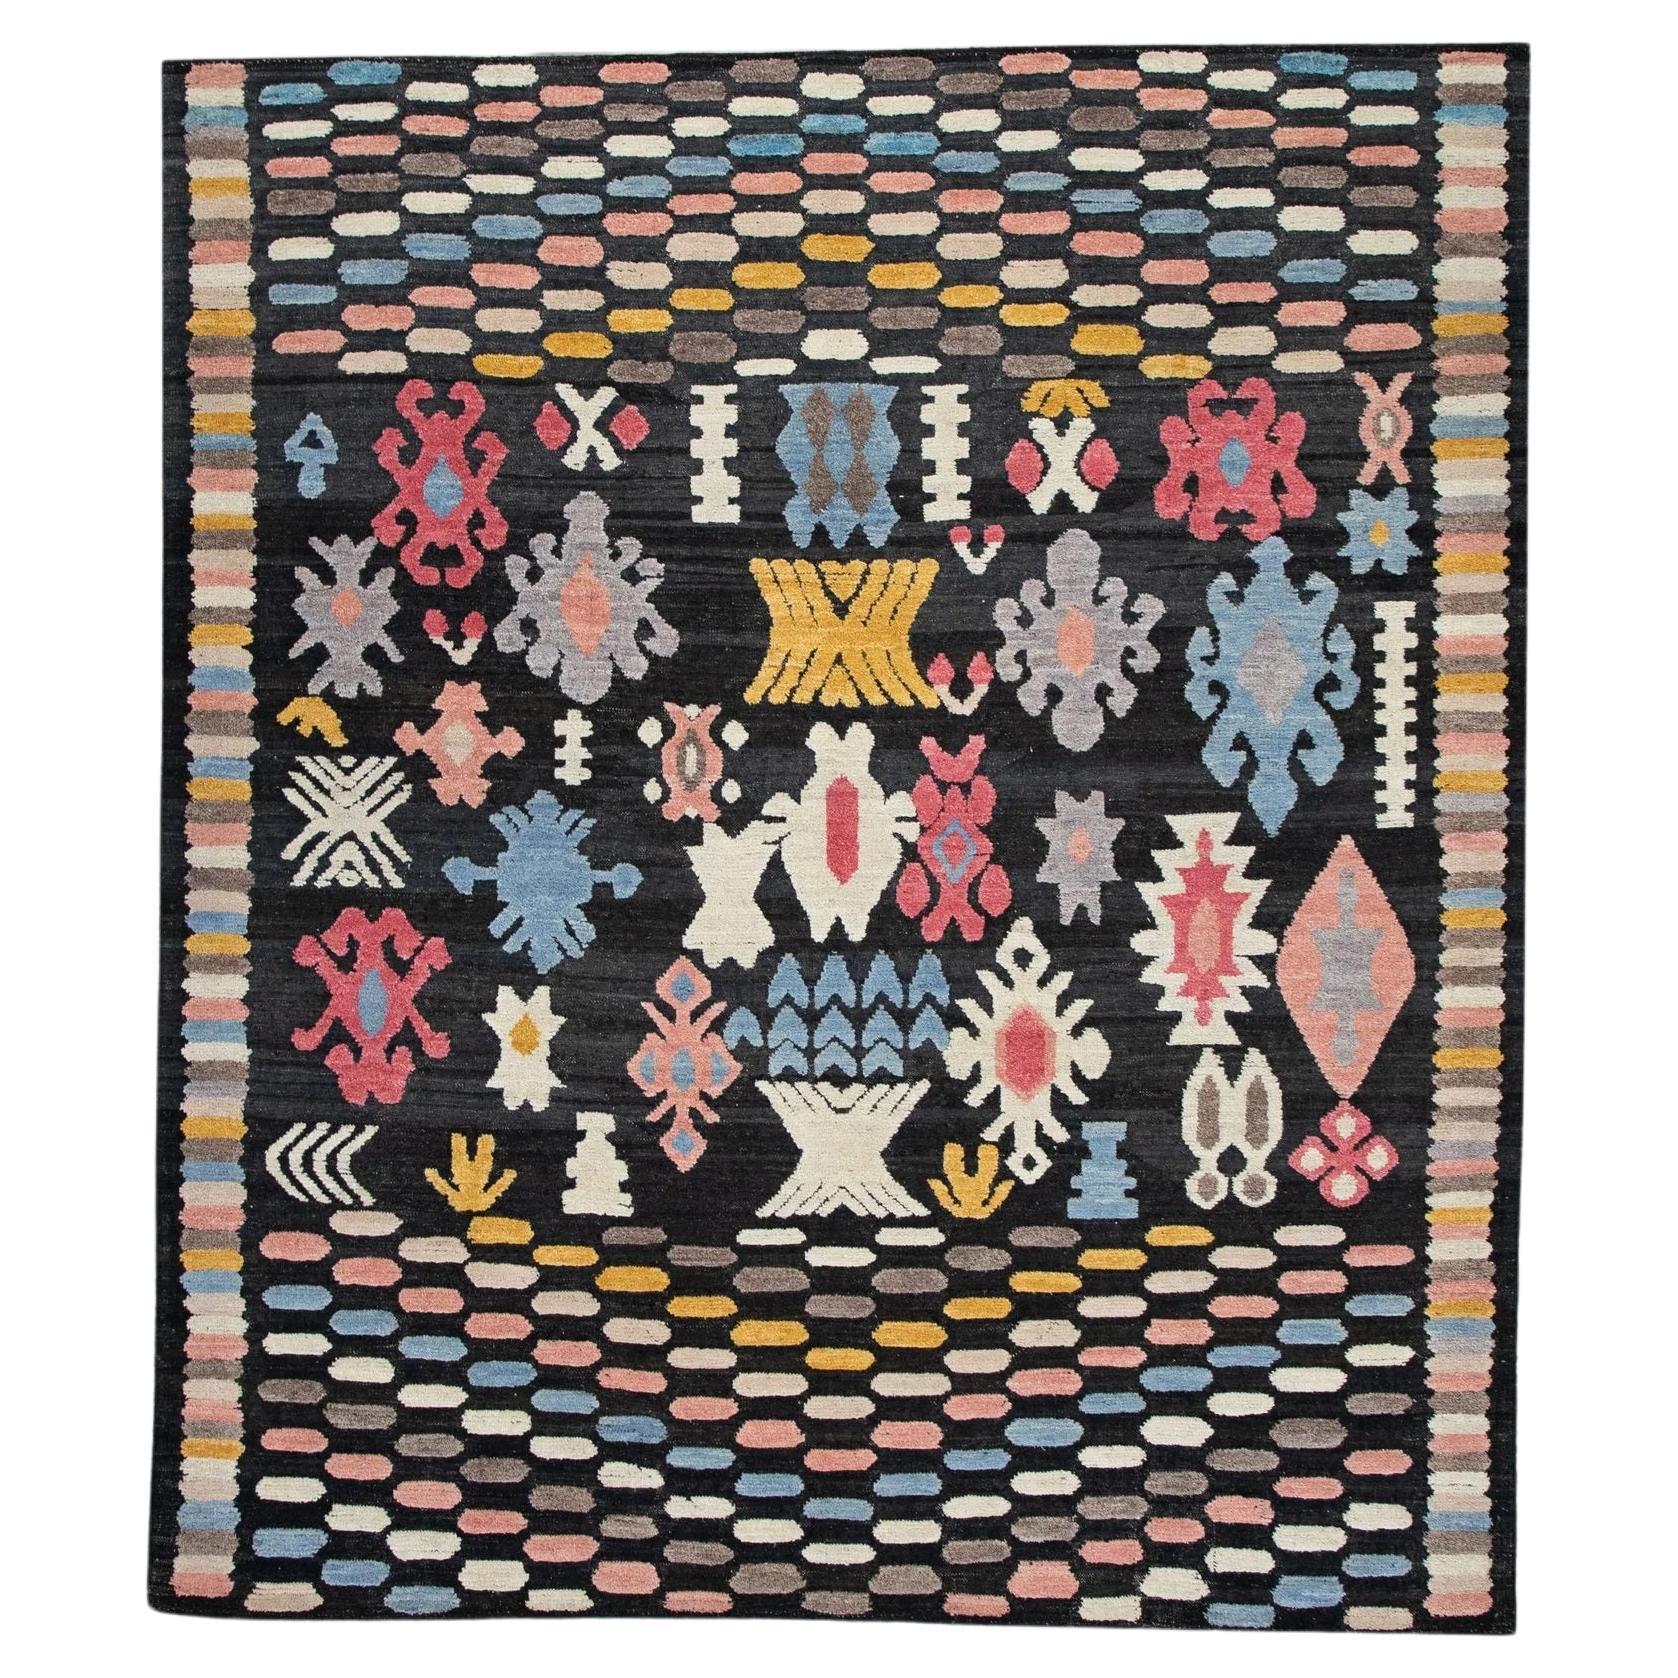 Flatweave Handmade Wool Rug in Pink, Blue, Yellow Geometric Design 8'11" x 10'3"